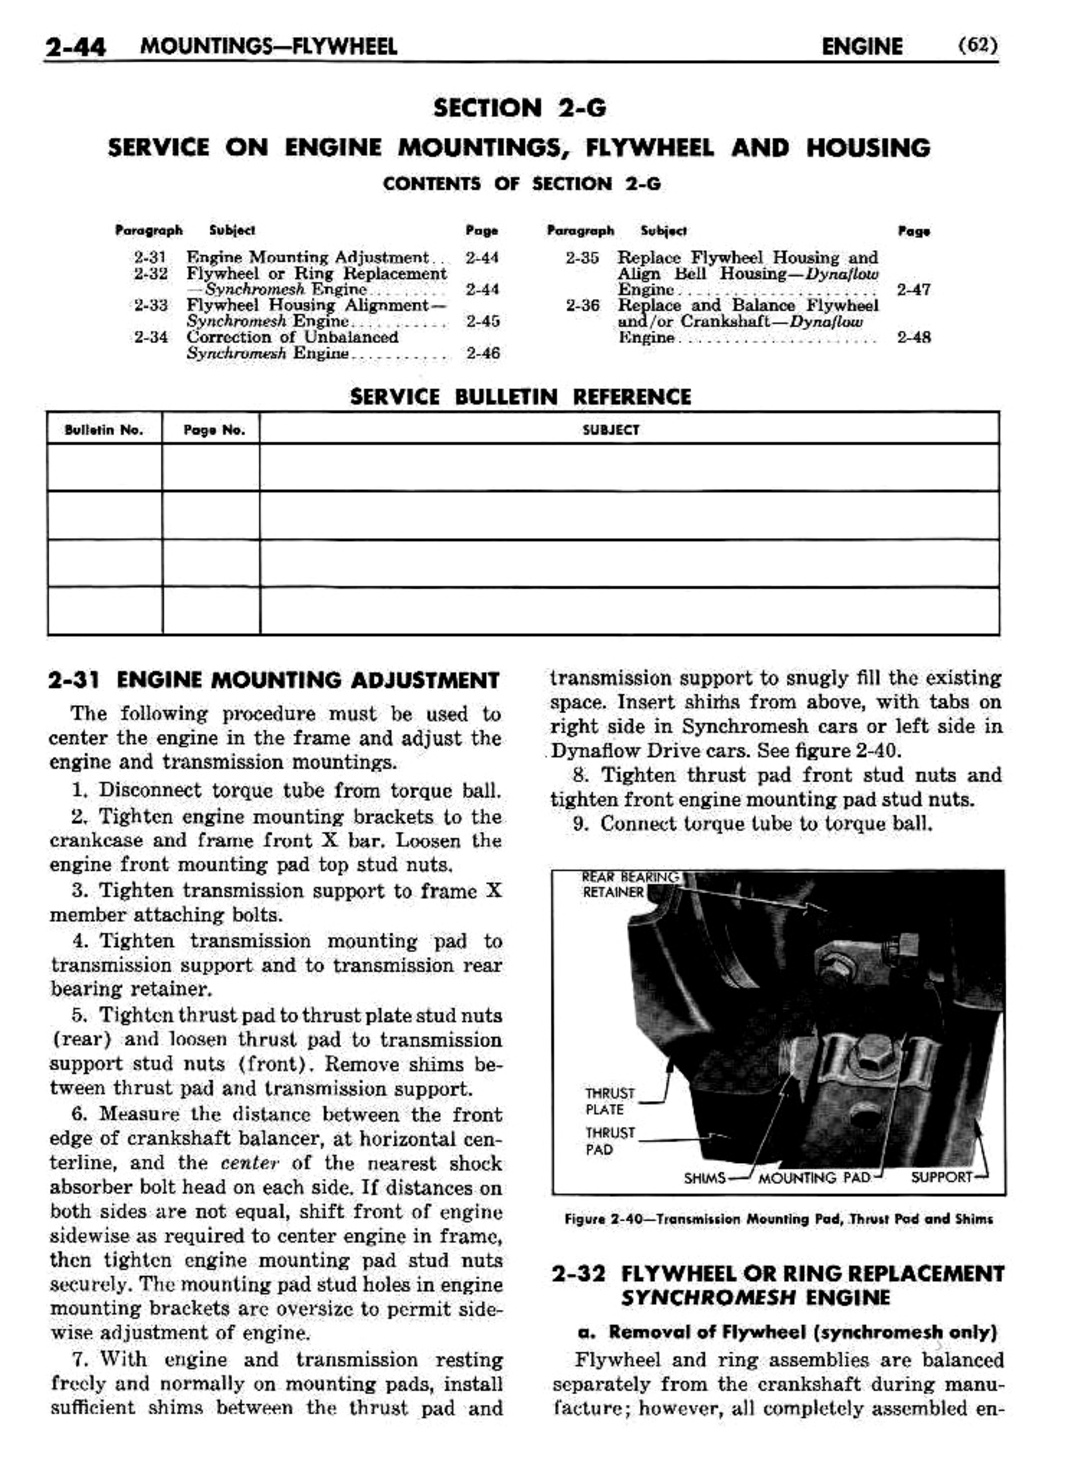 n_03 1951 Buick Shop Manual - Engine-044-044.jpg